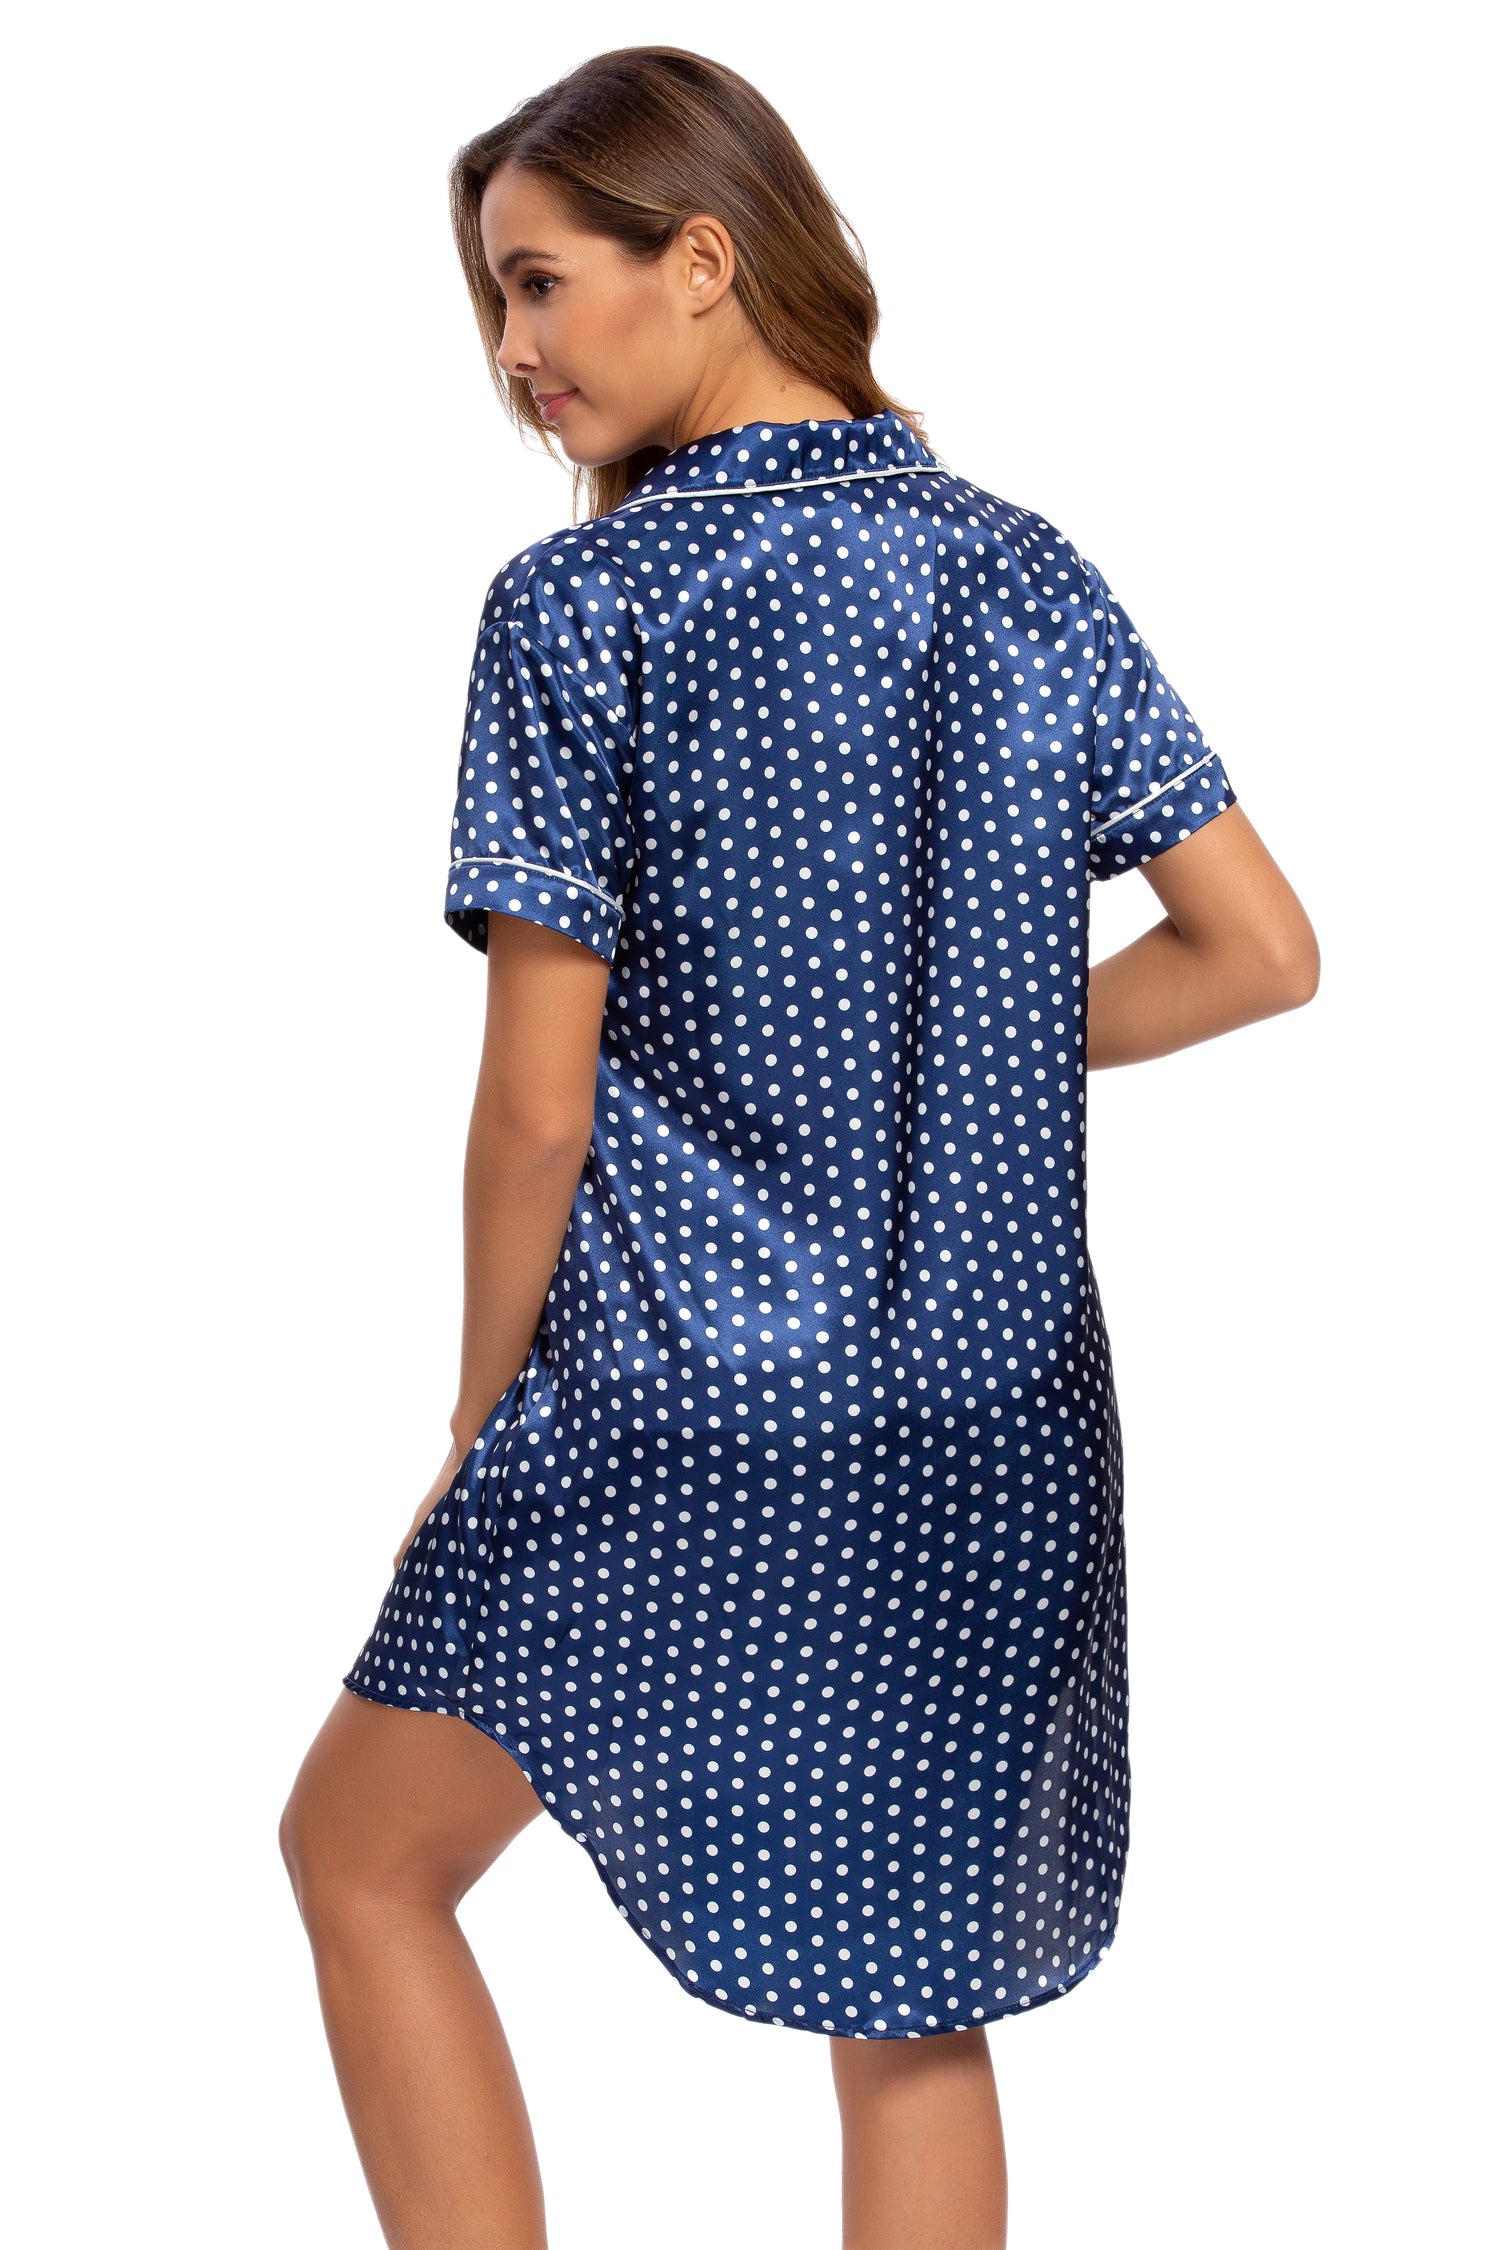 Short Sleeve Satin Boyfriend Collar Sleepwear Navy Spot